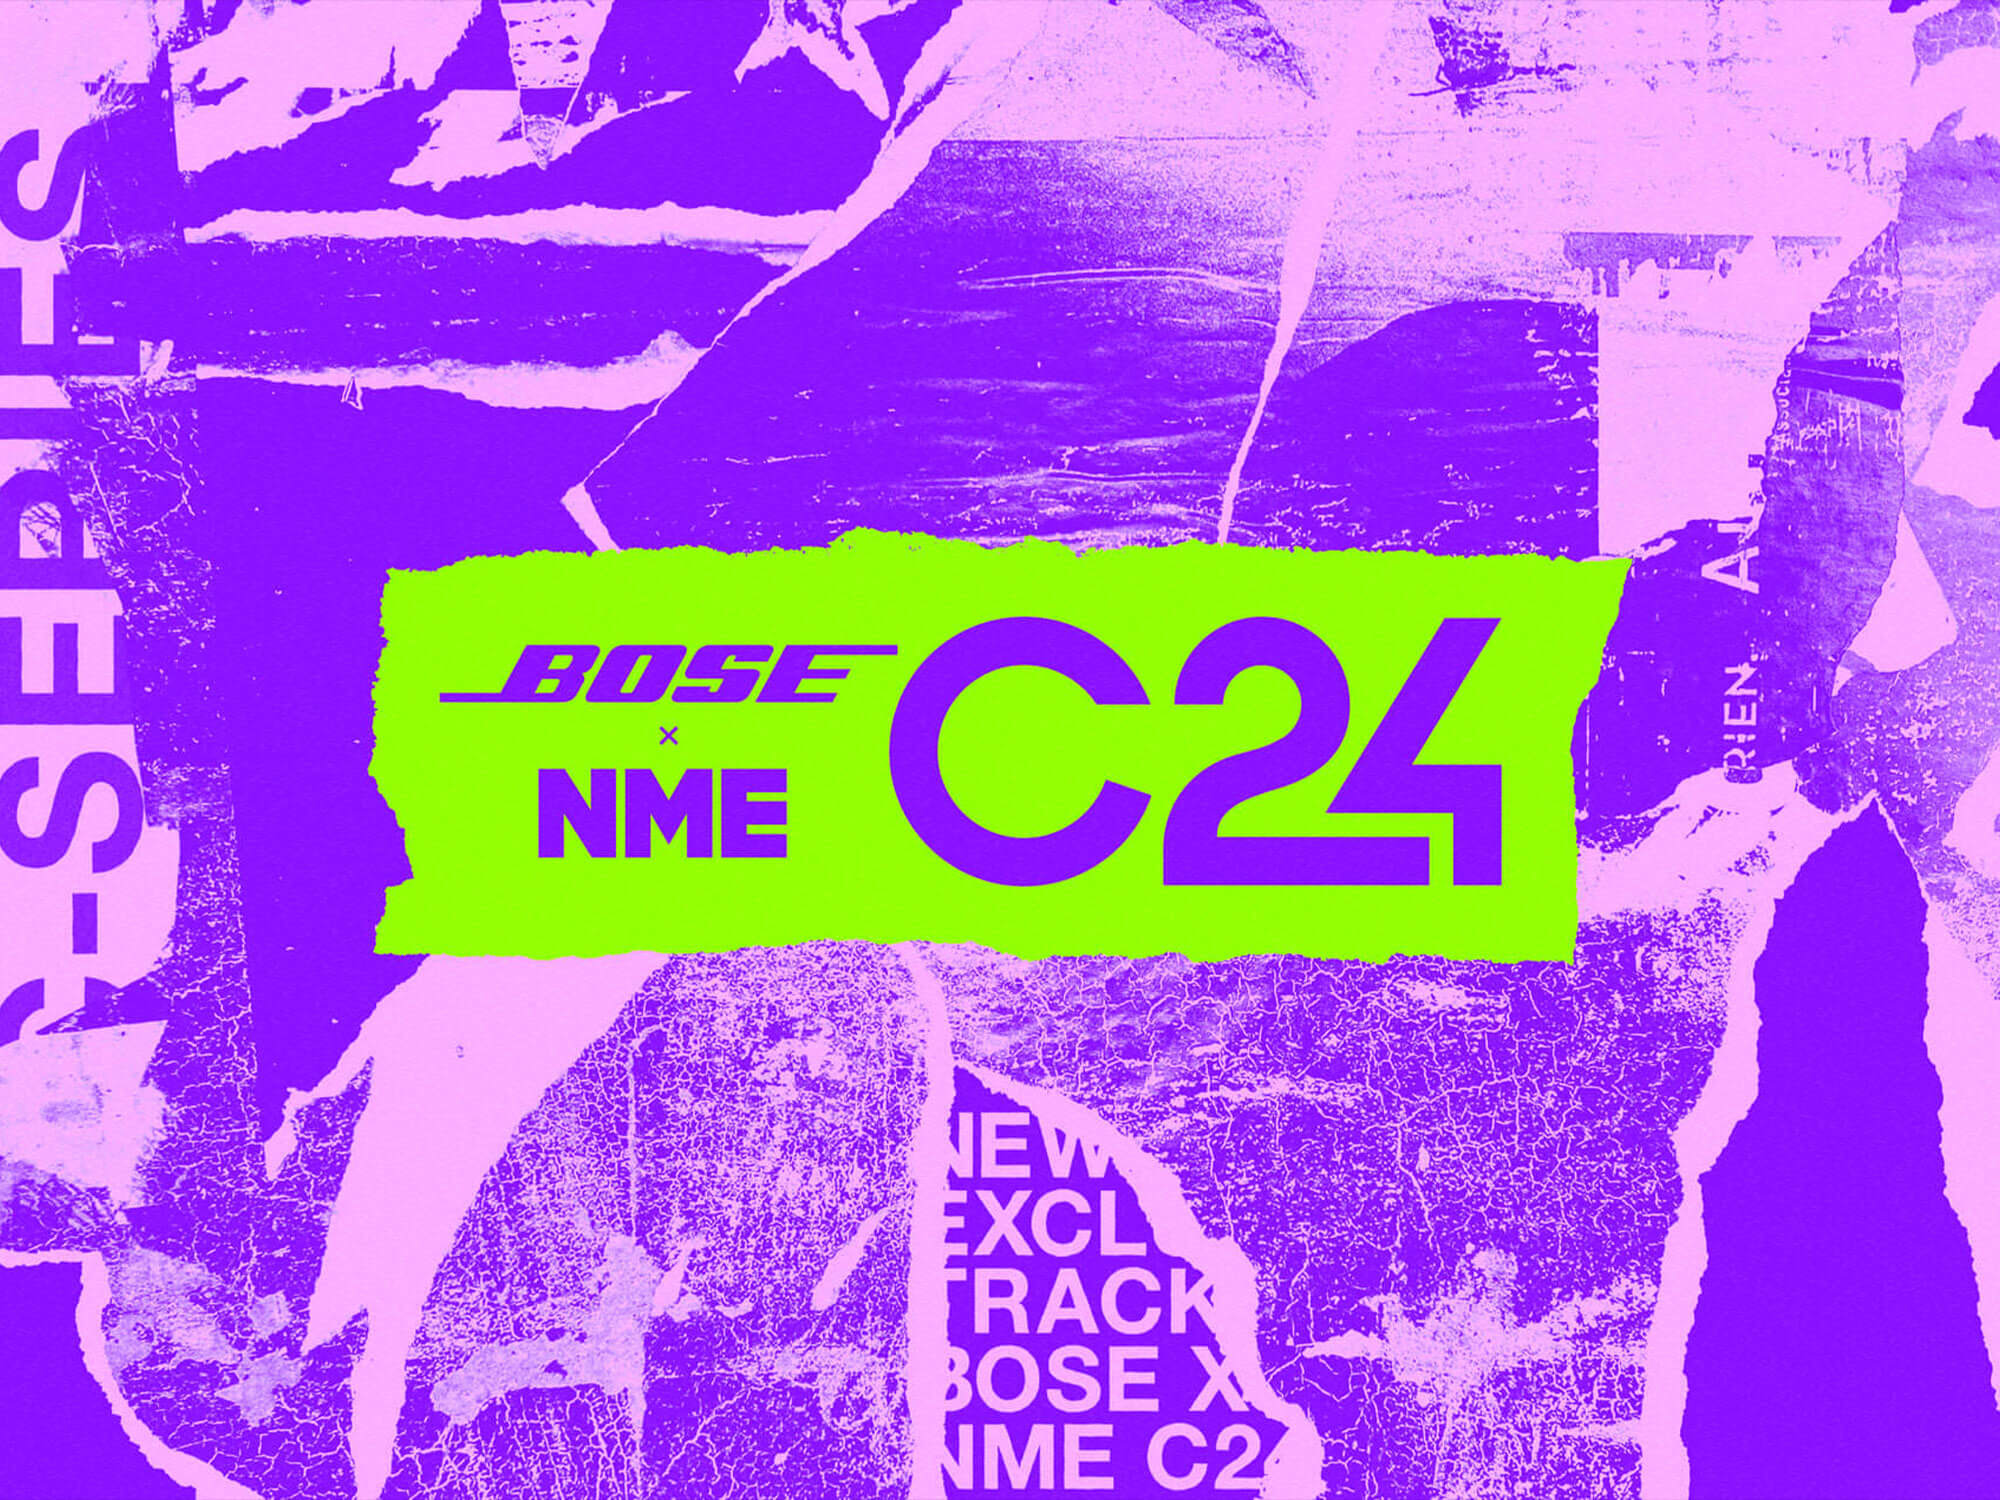 Bose x NME C24